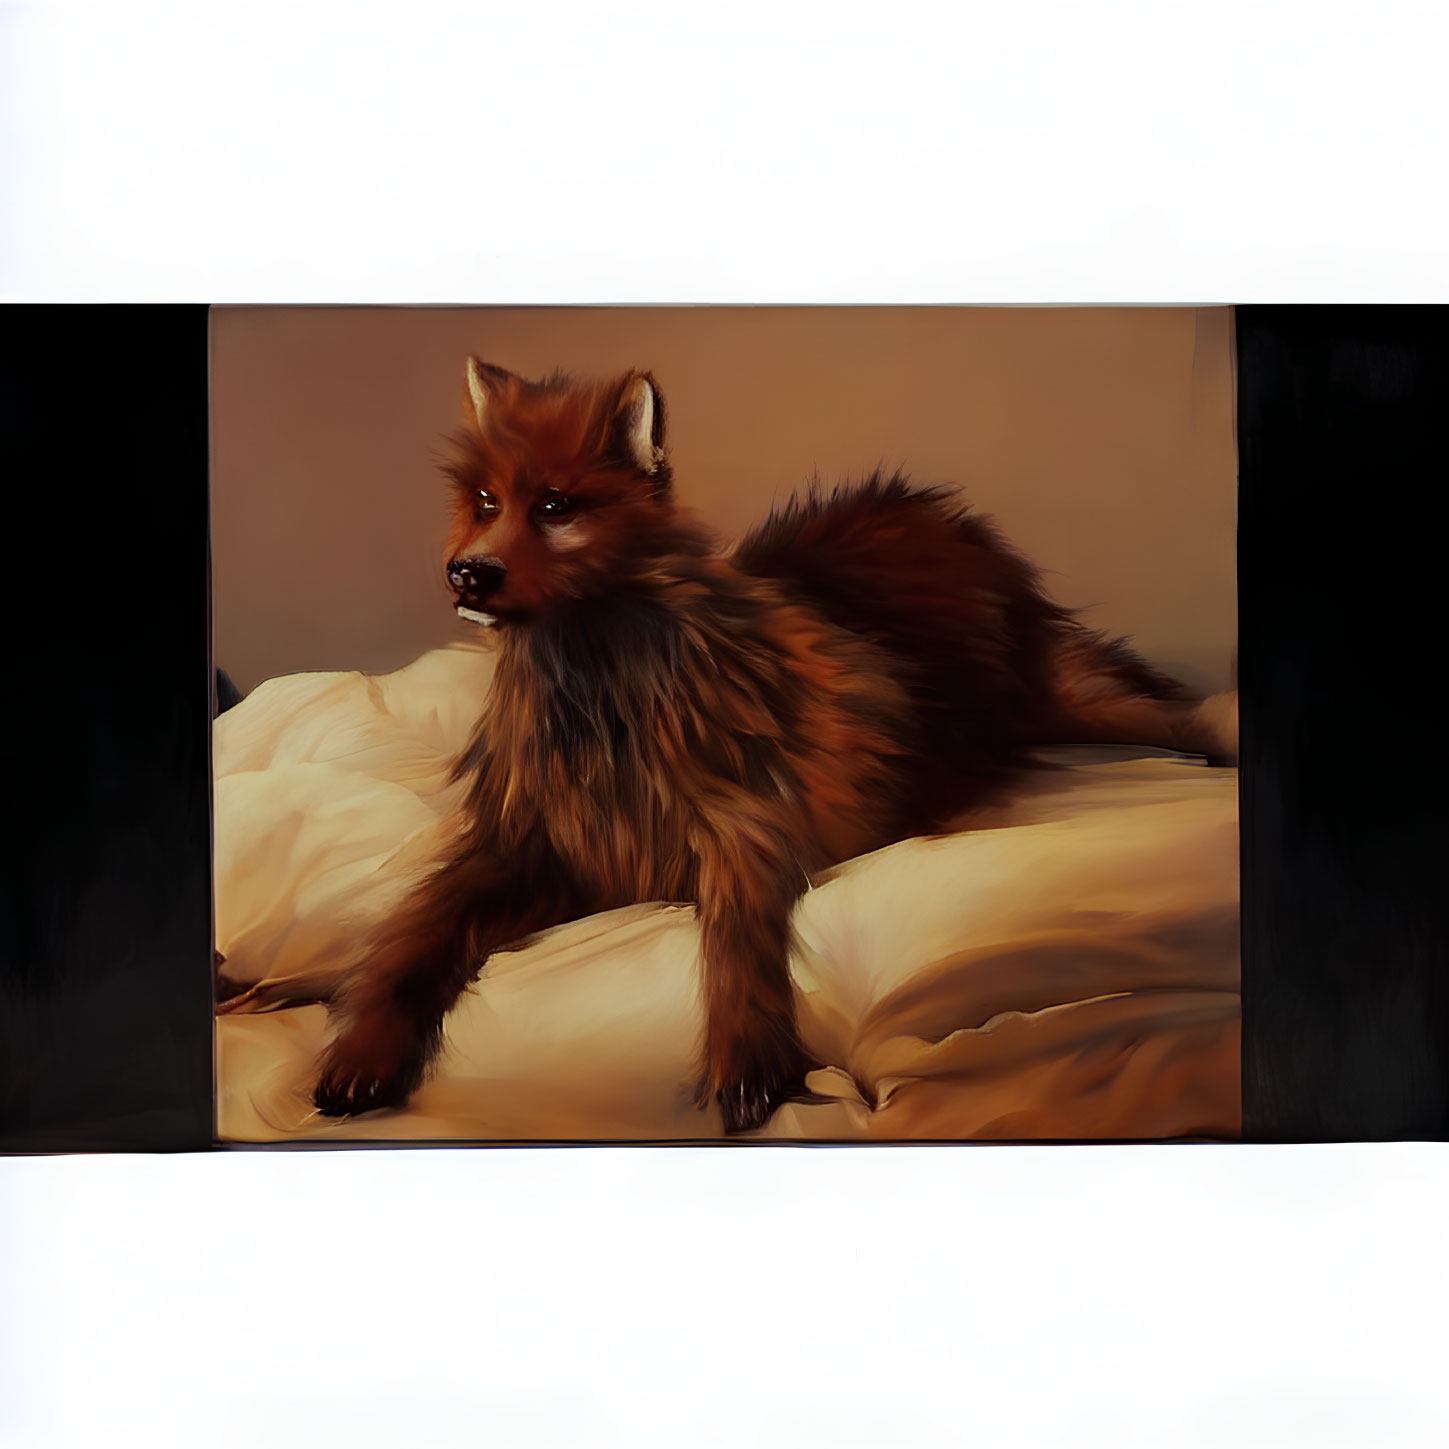 Brown Fox Resting on Cream Pillows Against Dark Background